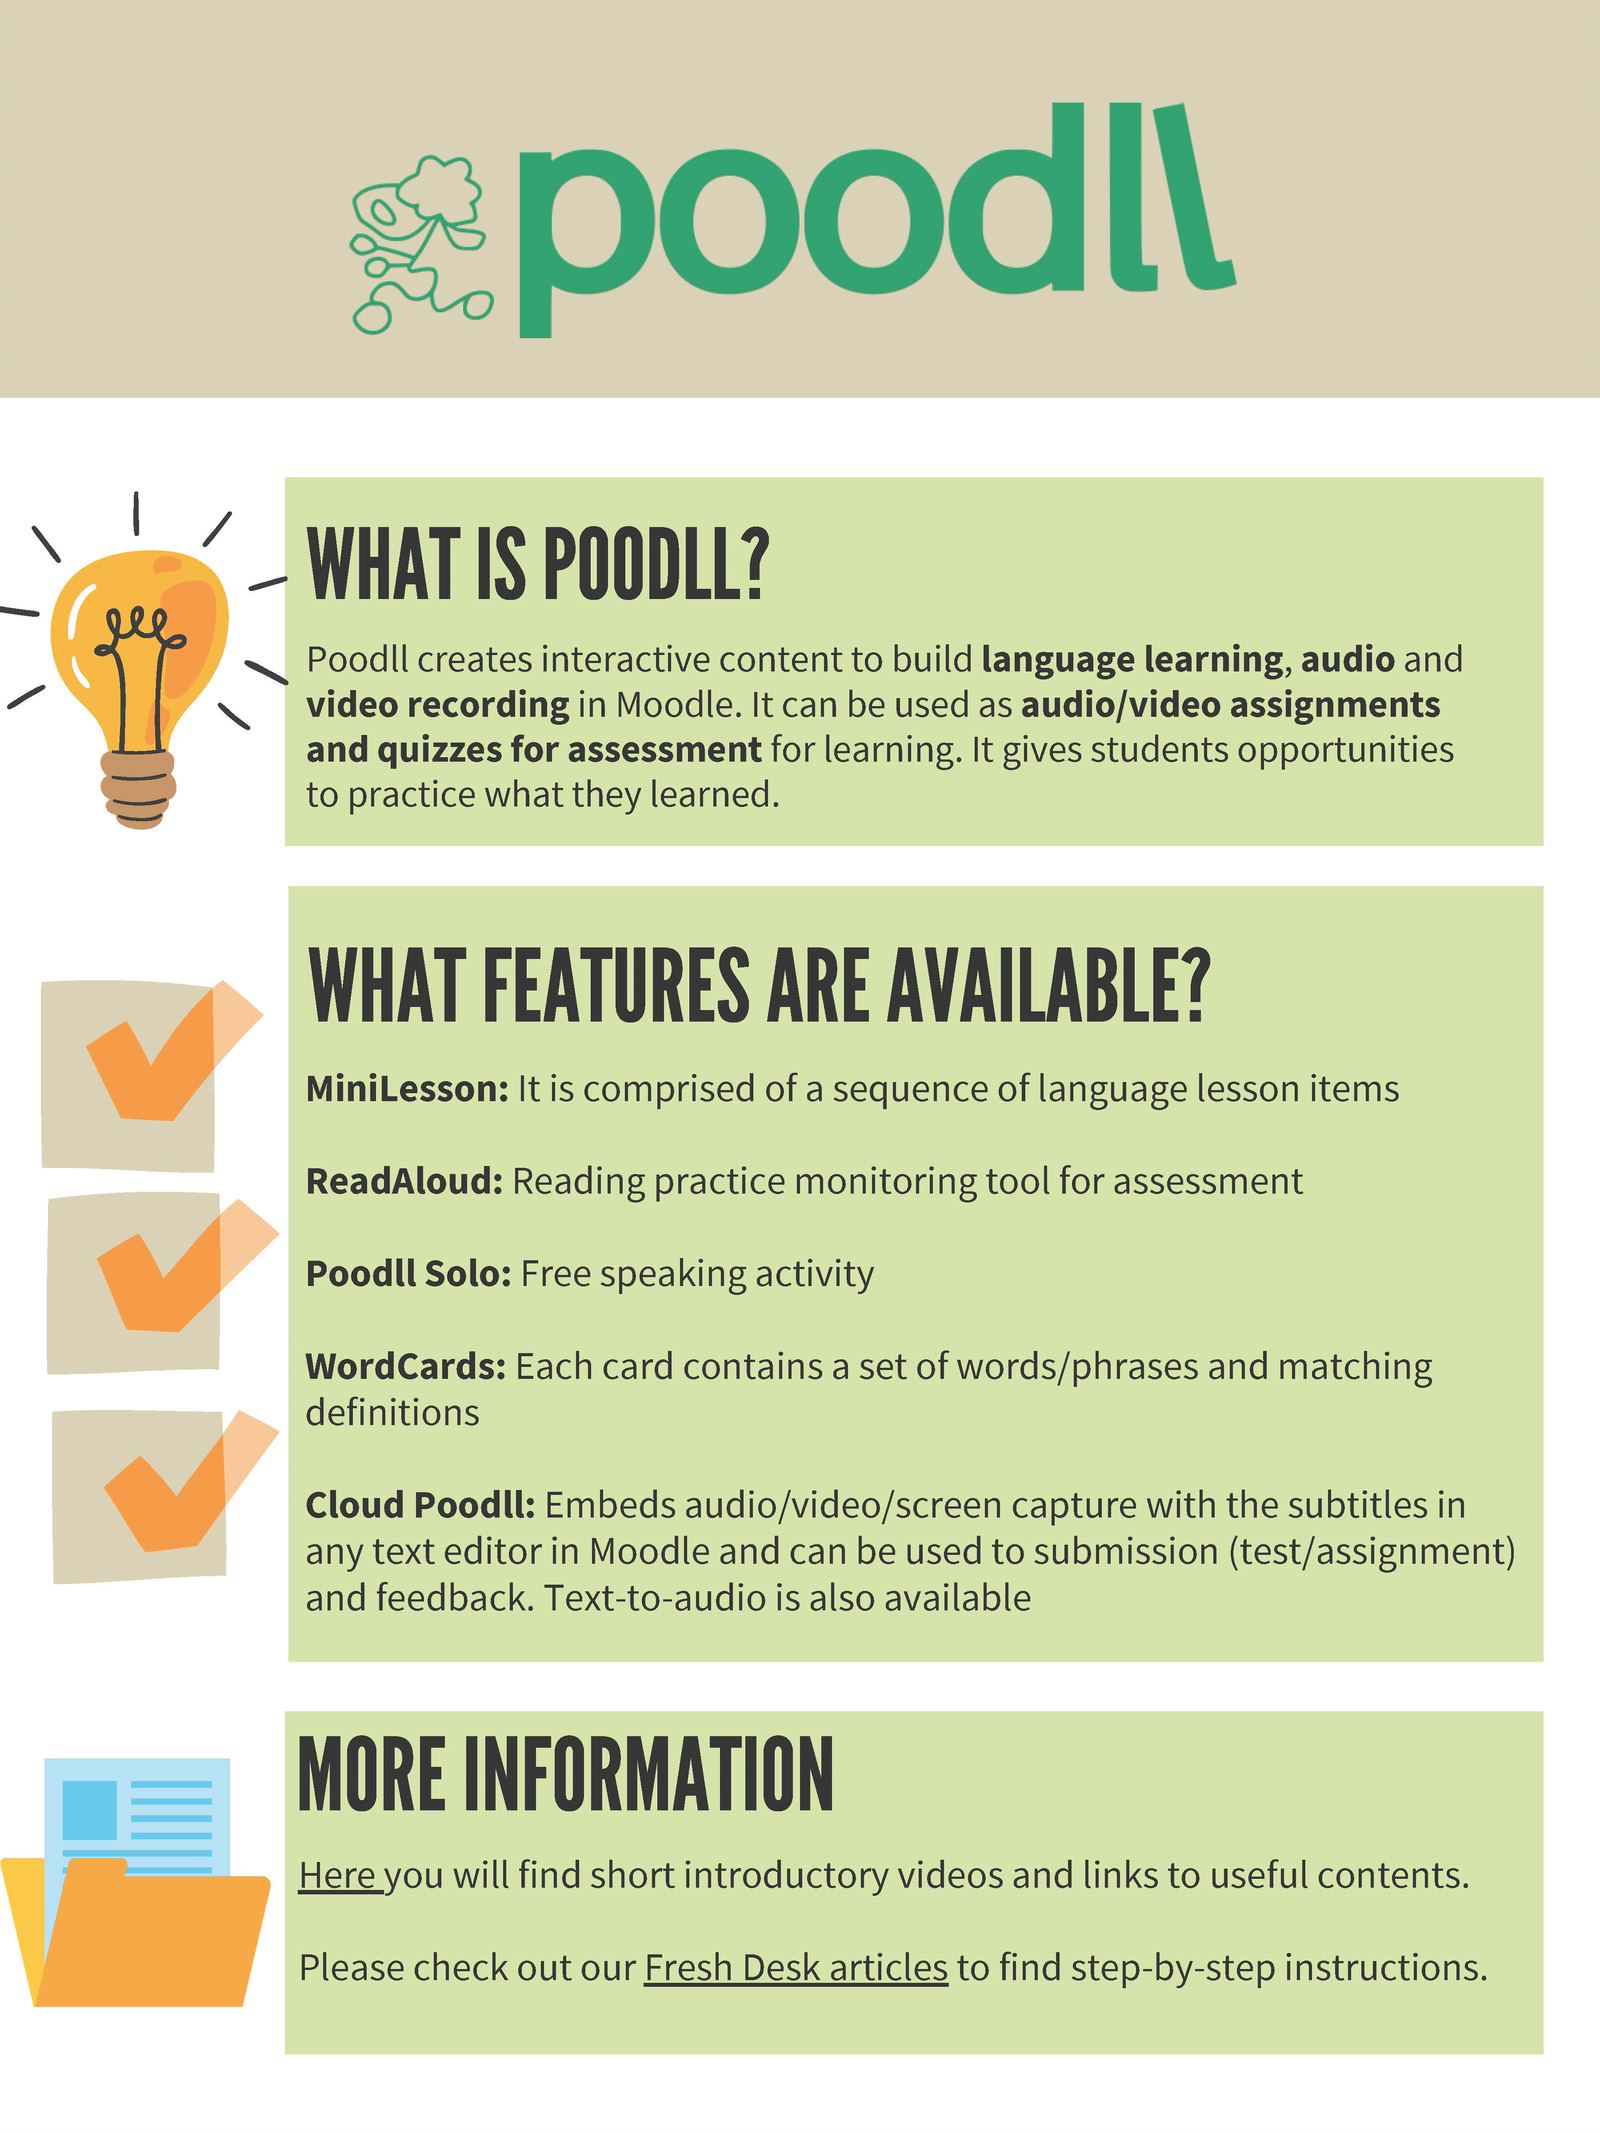 Poodll information poster